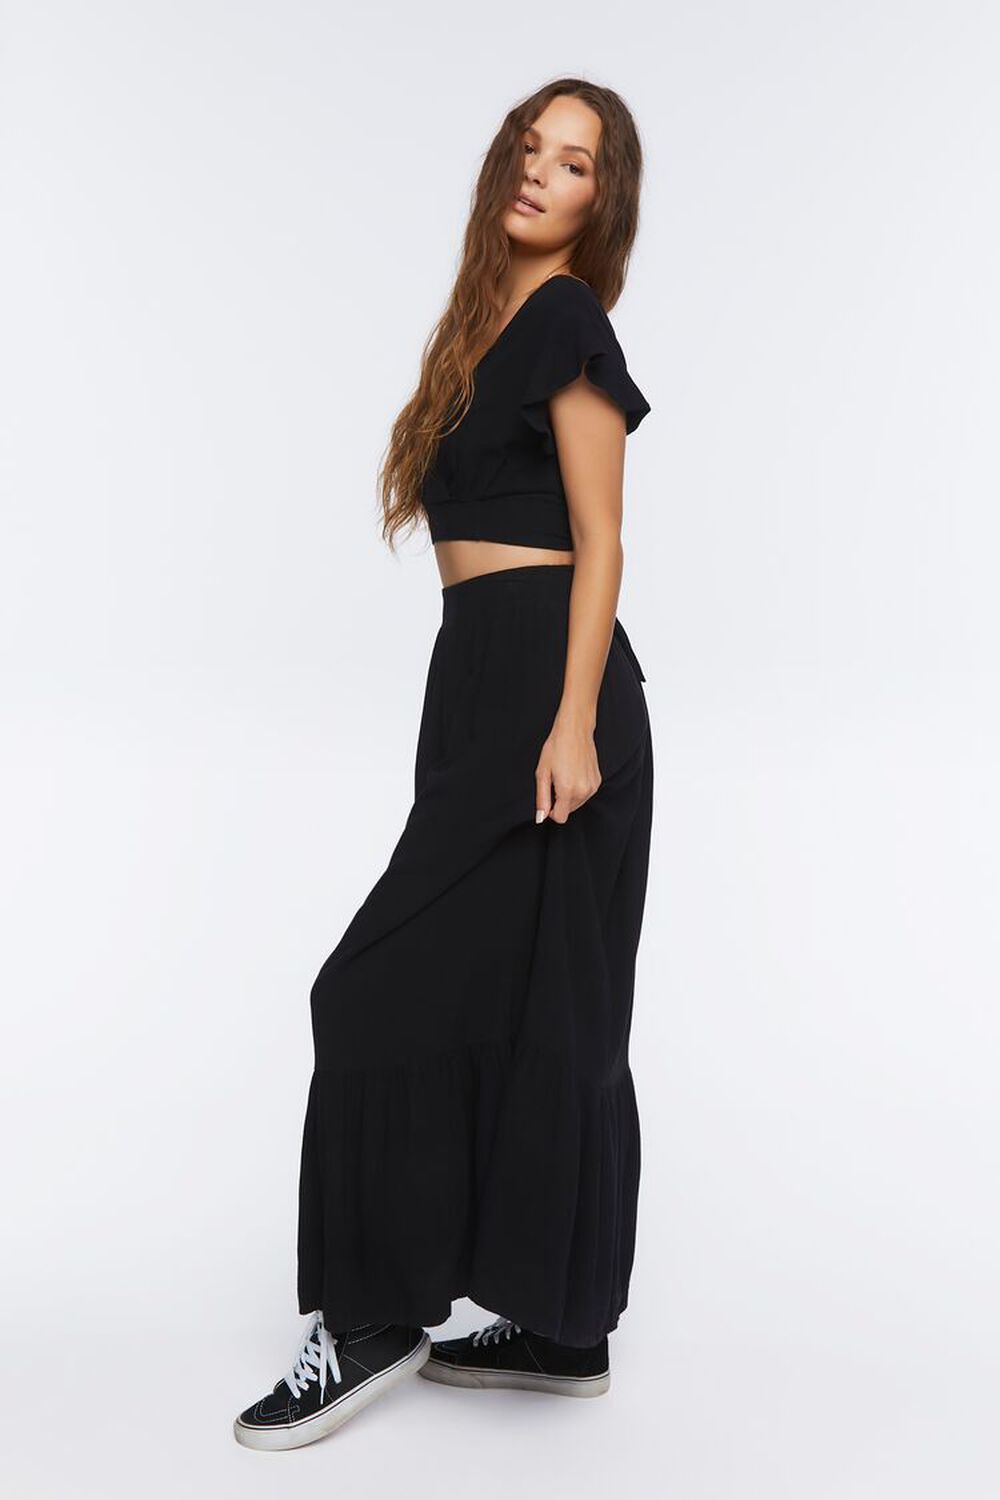 BLACK Surplice Crop Top & Skirt Set, image 2